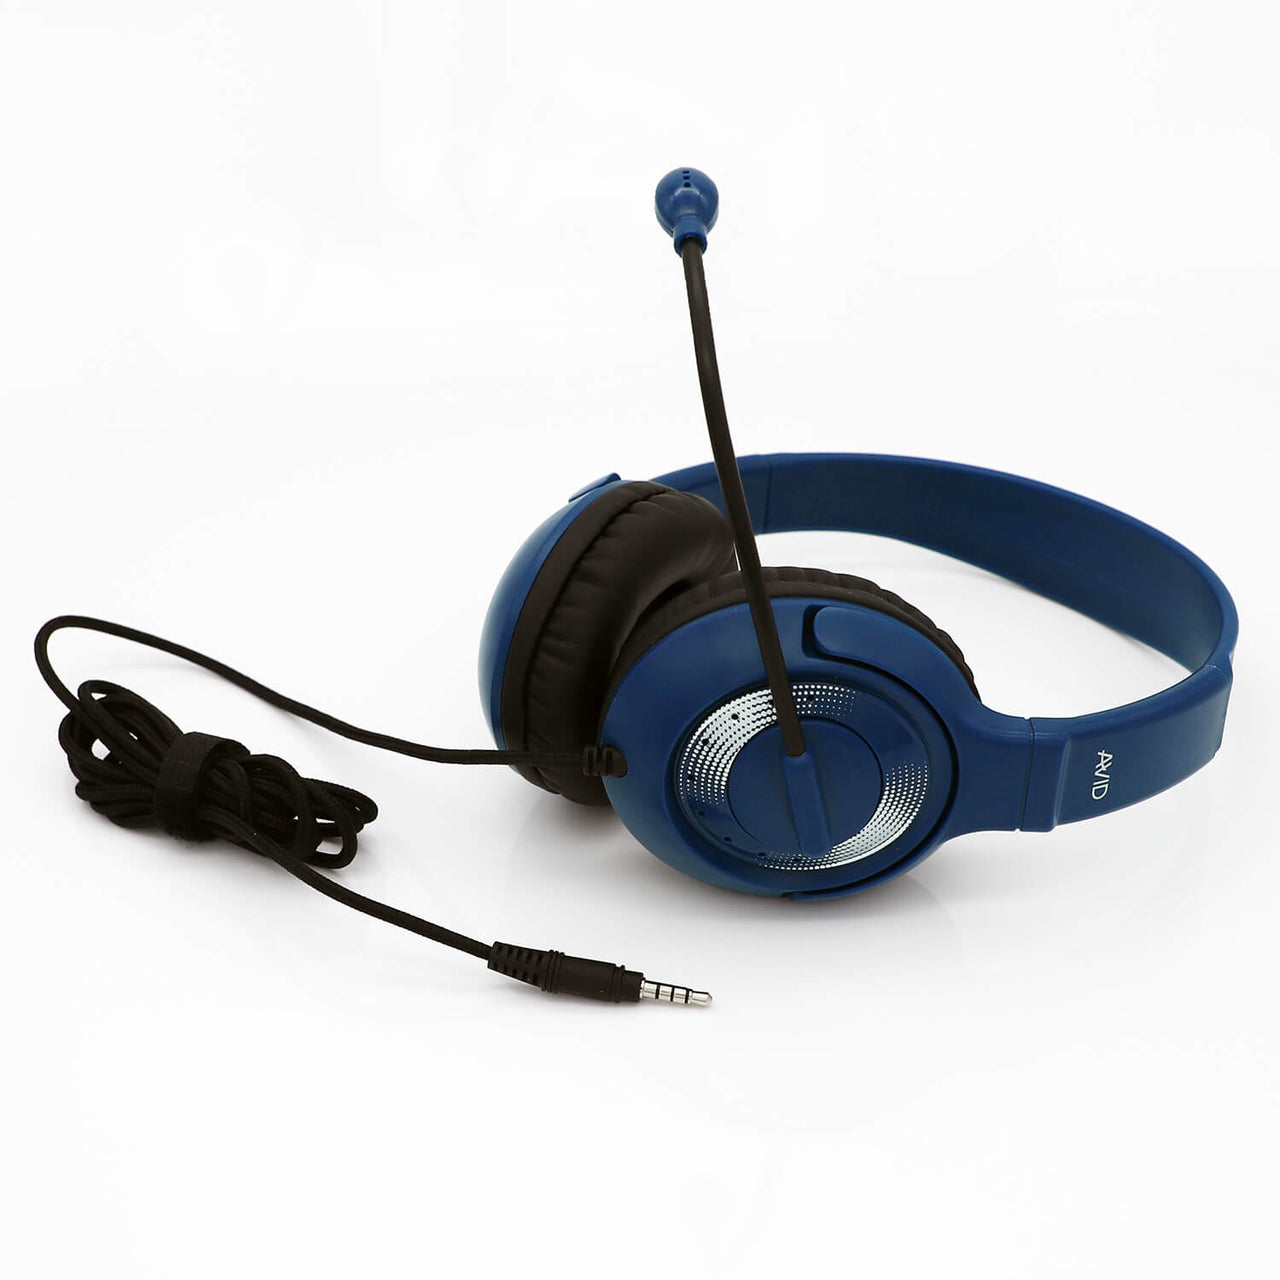 School Testing Headset with 3.5mm Plug (Blue/Black) - Learning Headphones